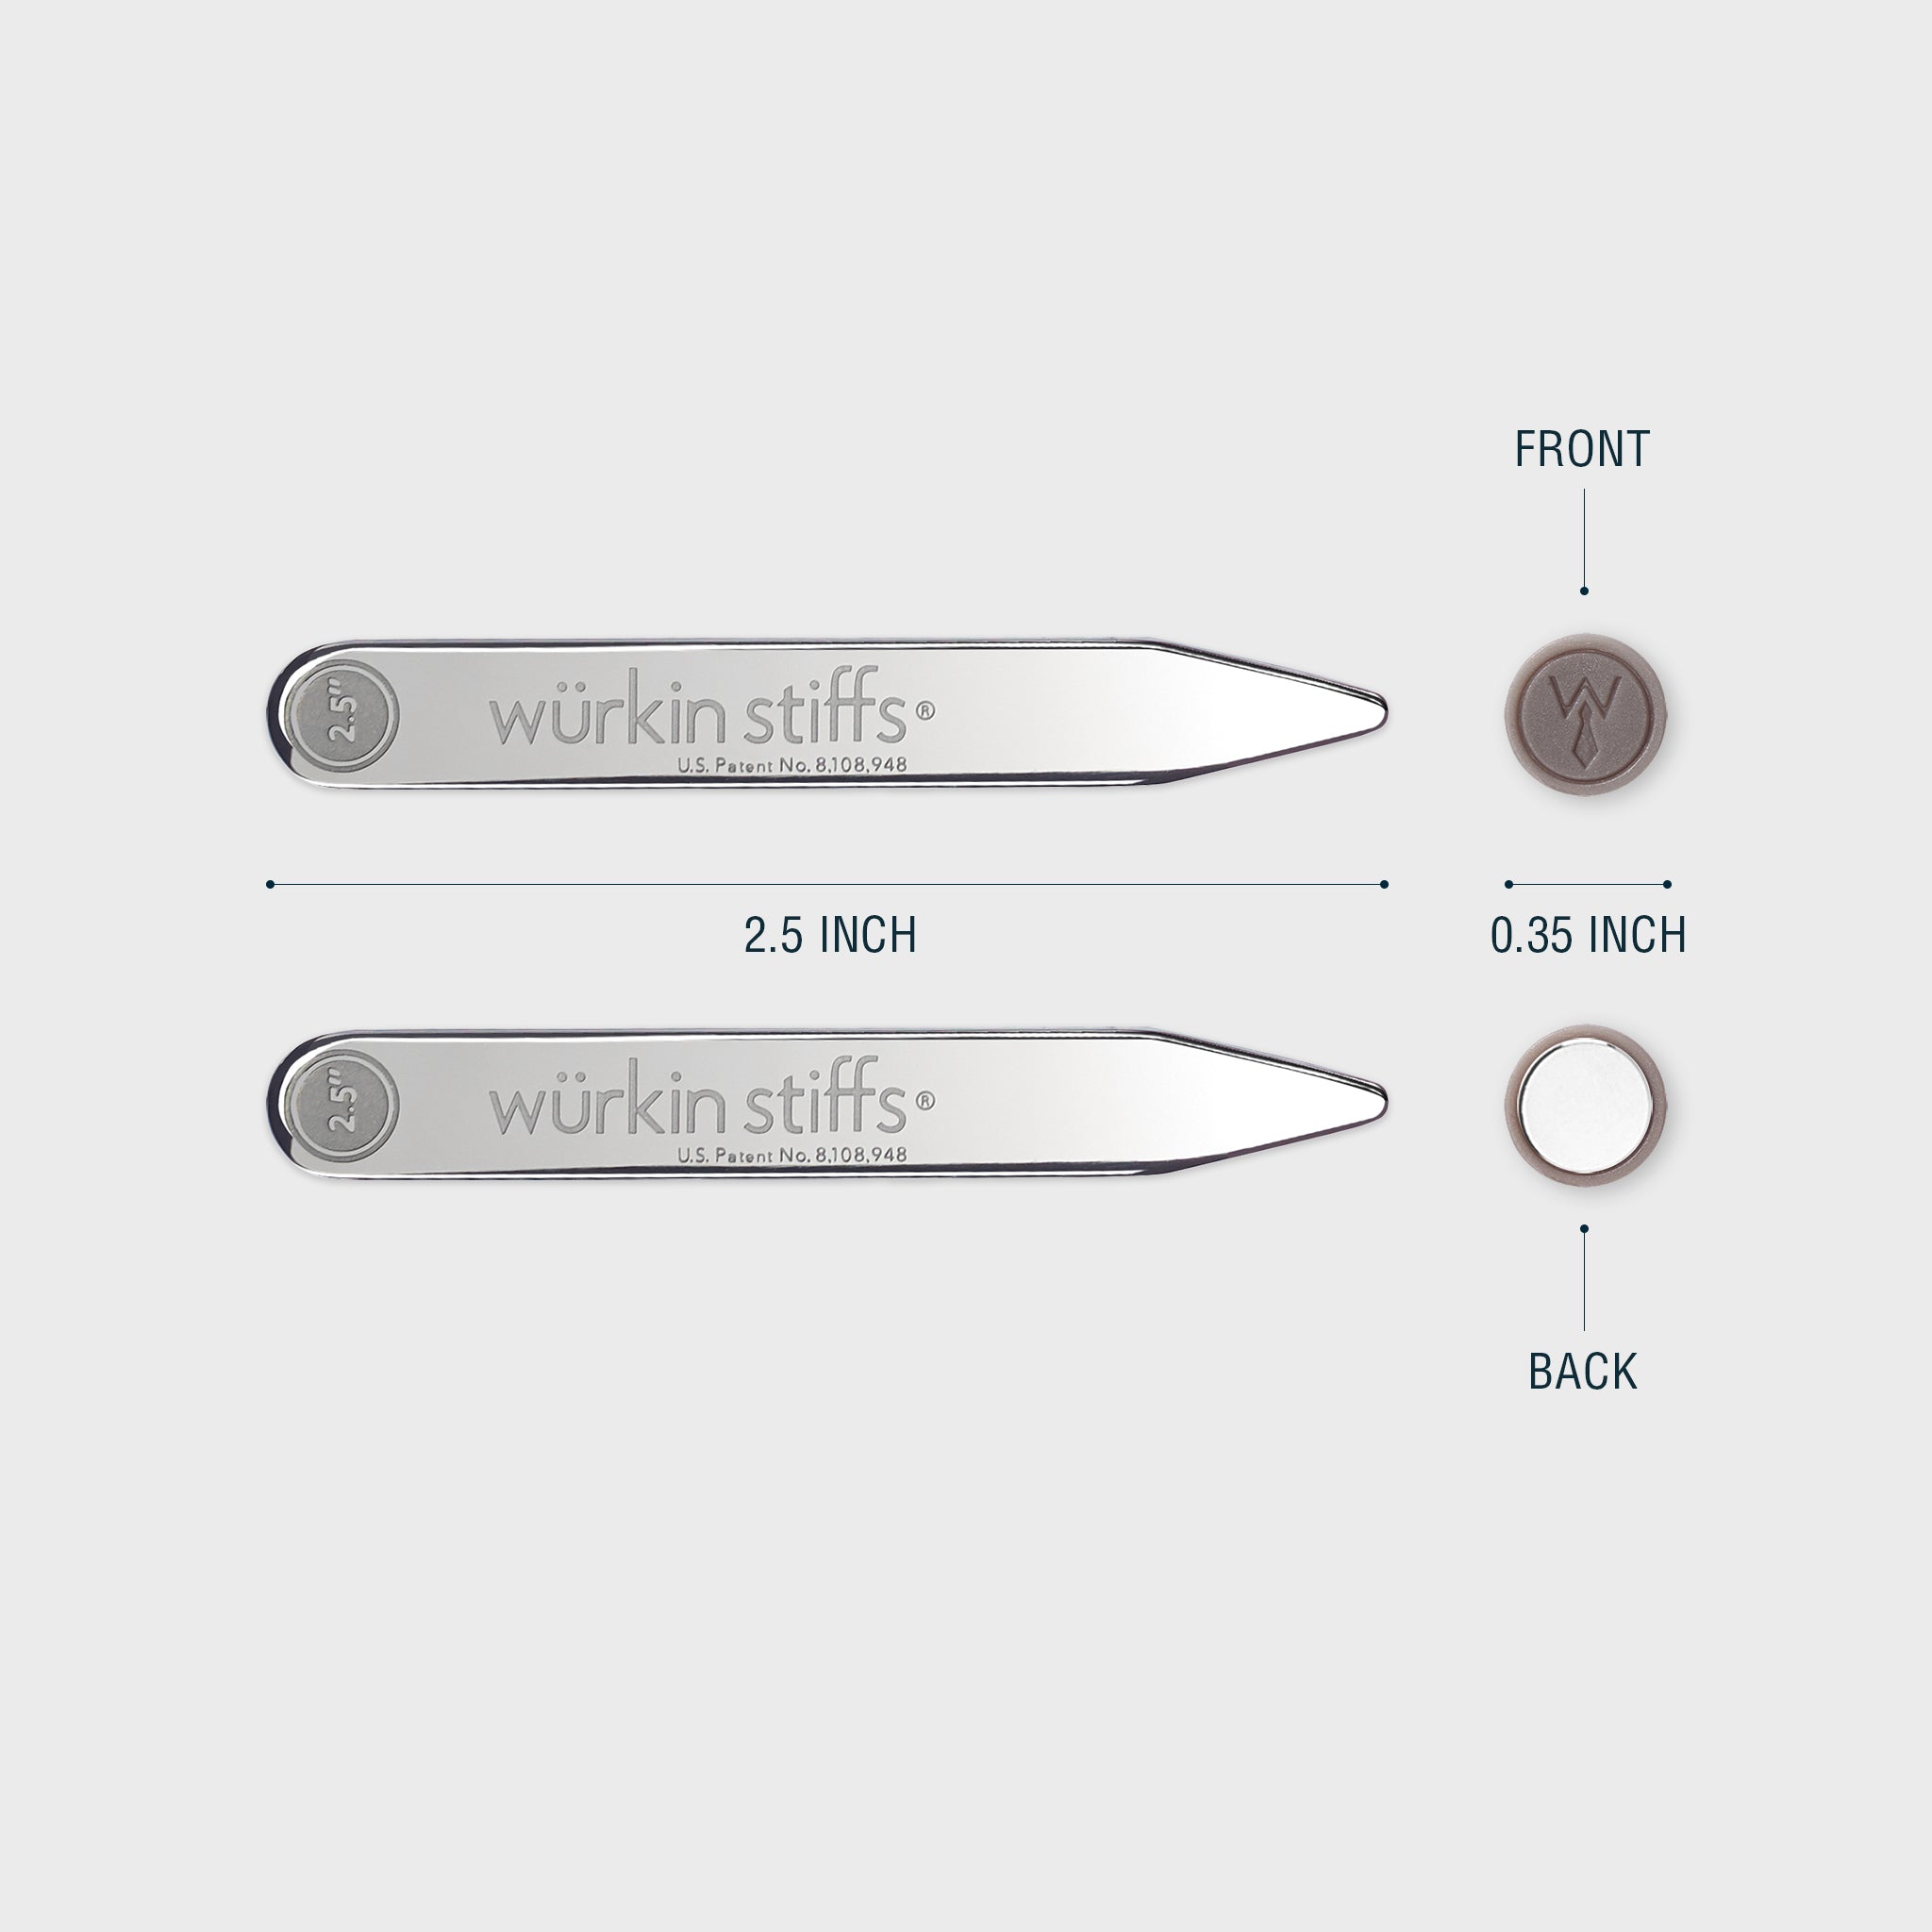 Wurkin Stiffs 2.5 Power Stays - Magnetic Collar Stays